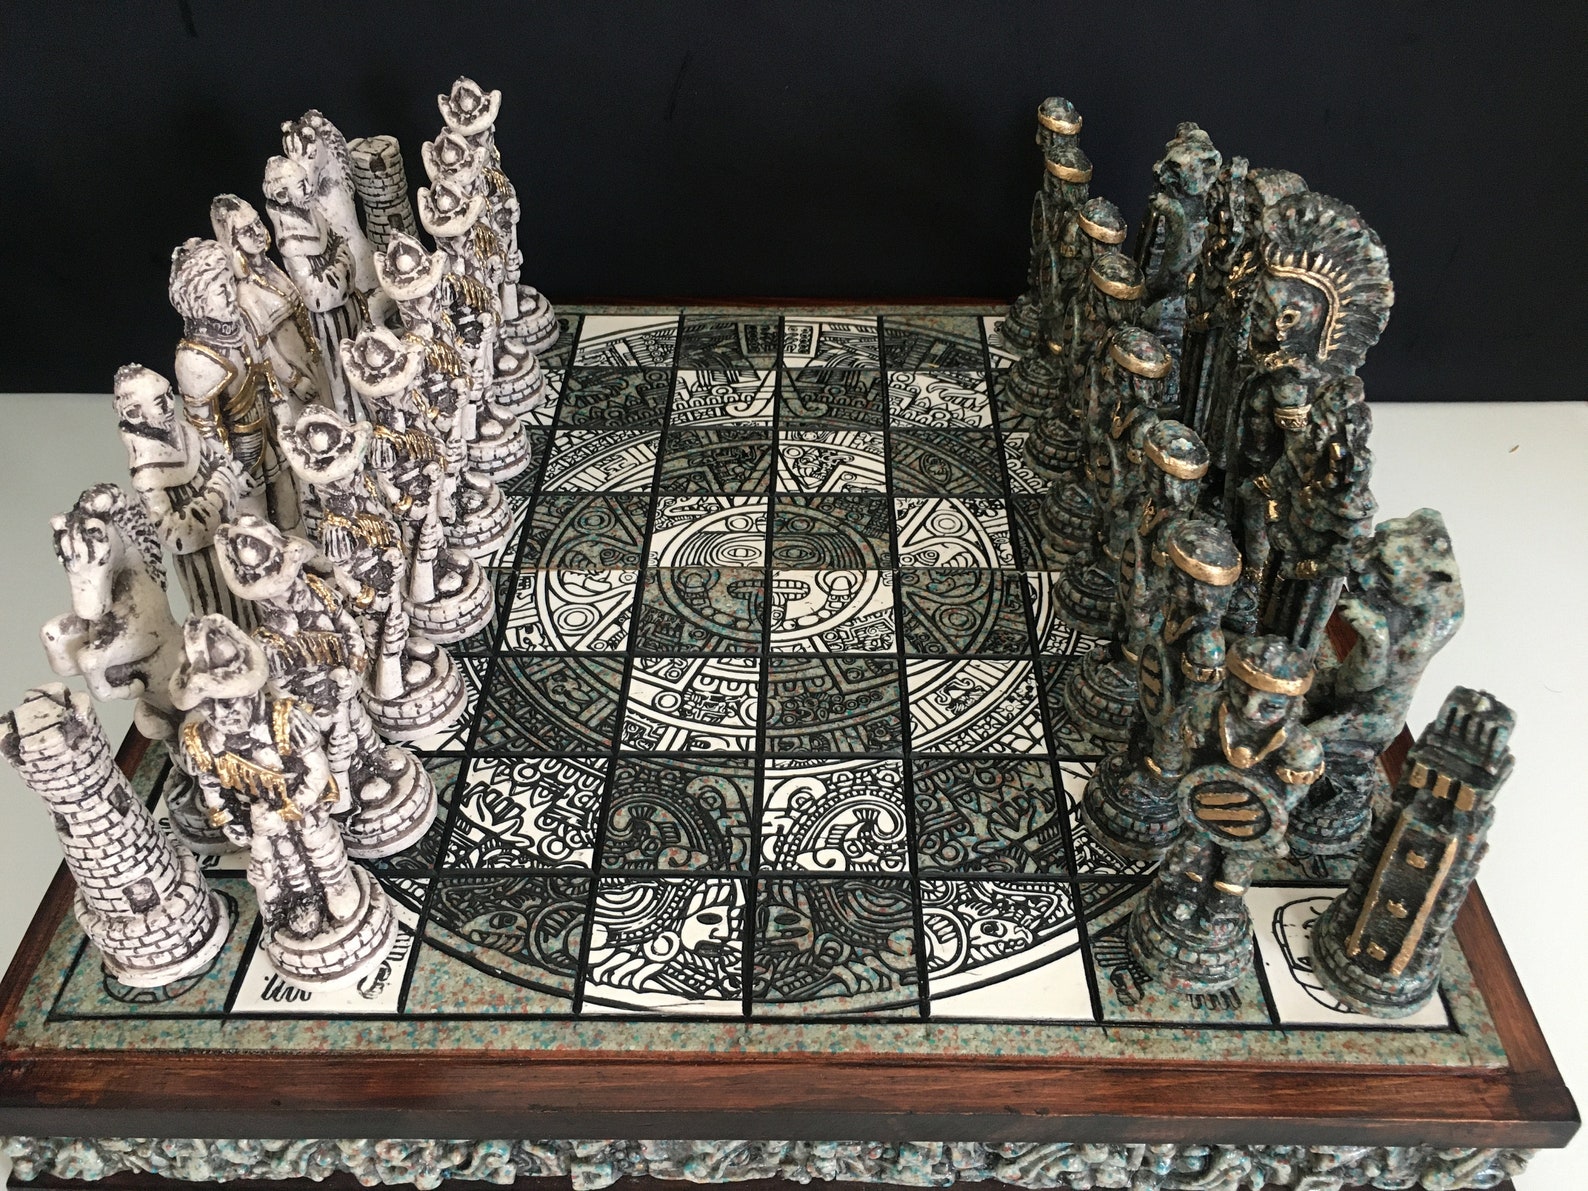 Handmade Wooden Chess Set Luxury Stone and Resin Chess - Etsy